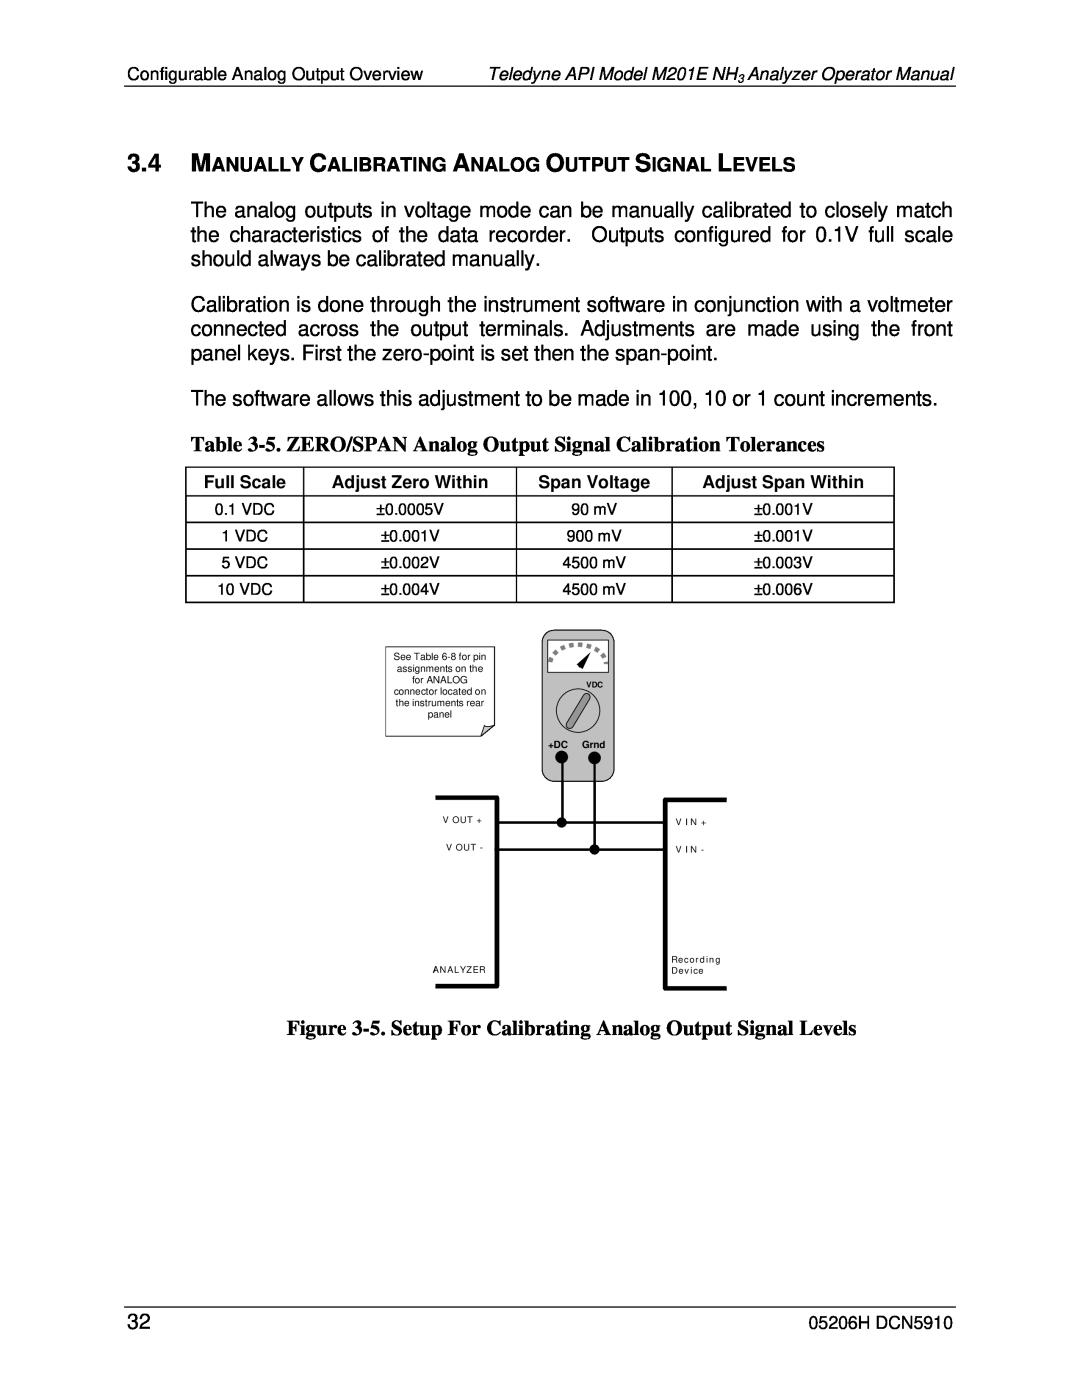 Teledyne M201E manual 